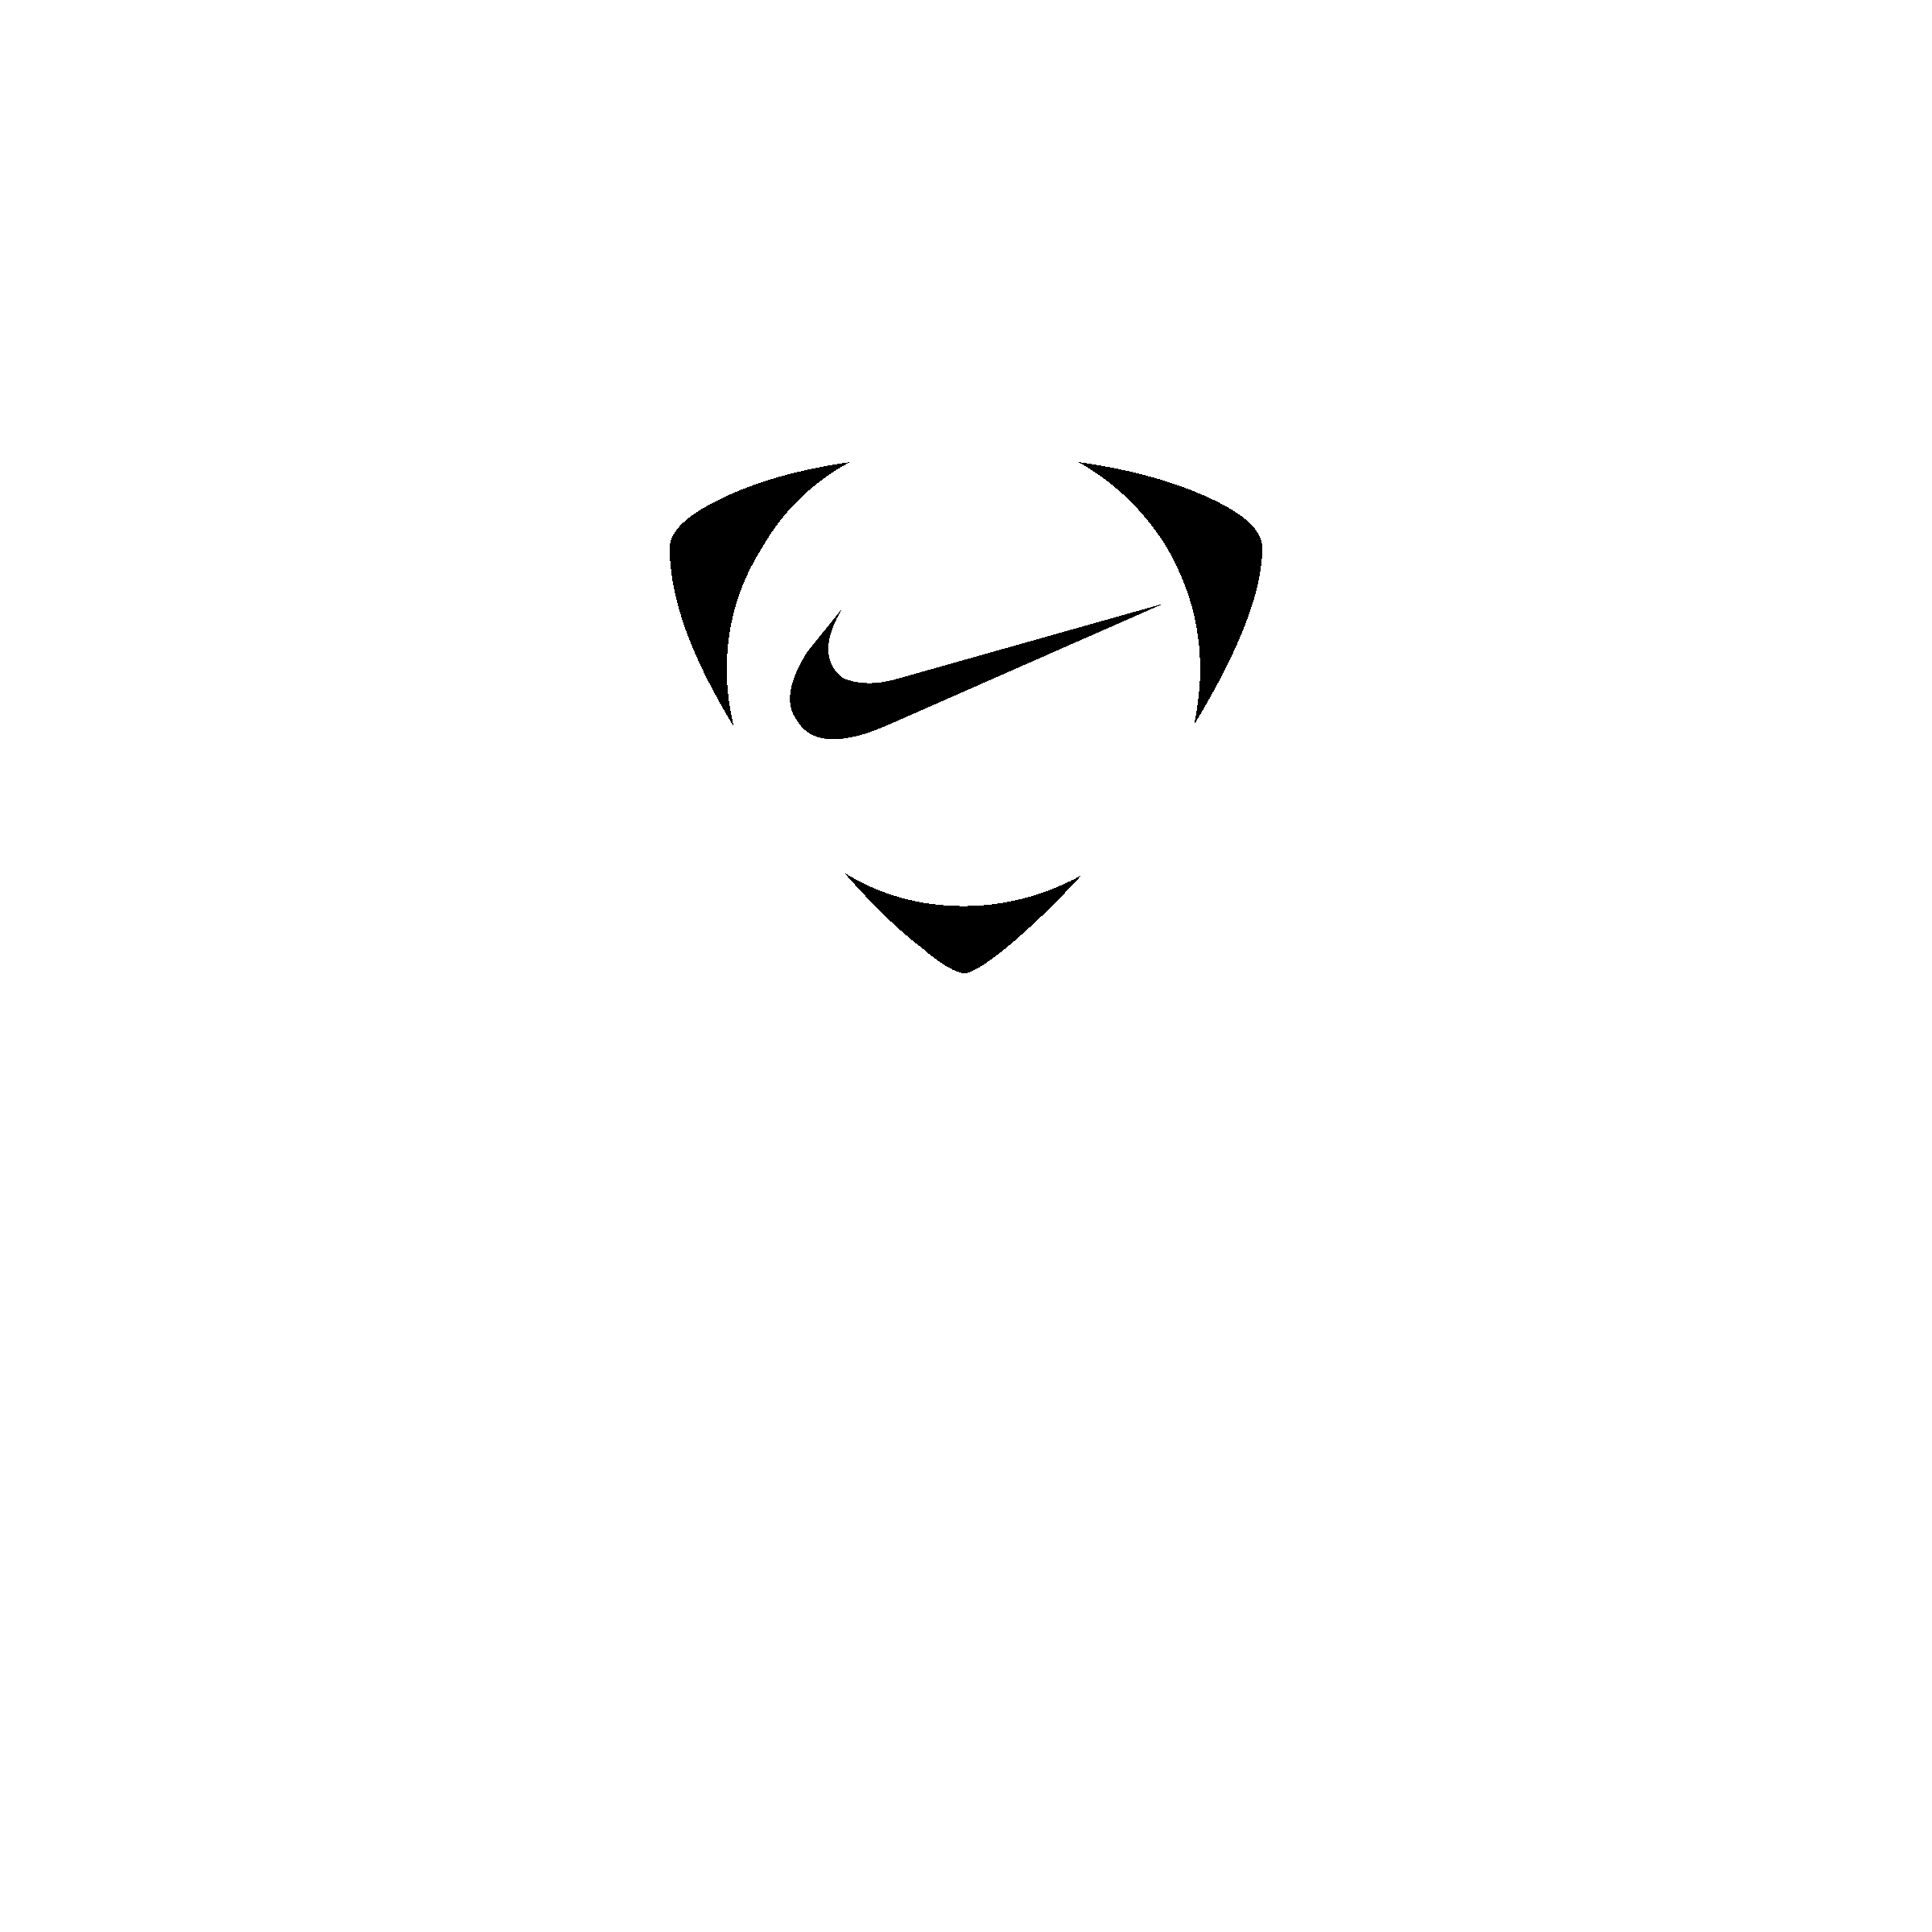 Black and White Nike Football Logo - Nikefootball com Logo PNG Transparent & SVG Vector - Freebie Supply